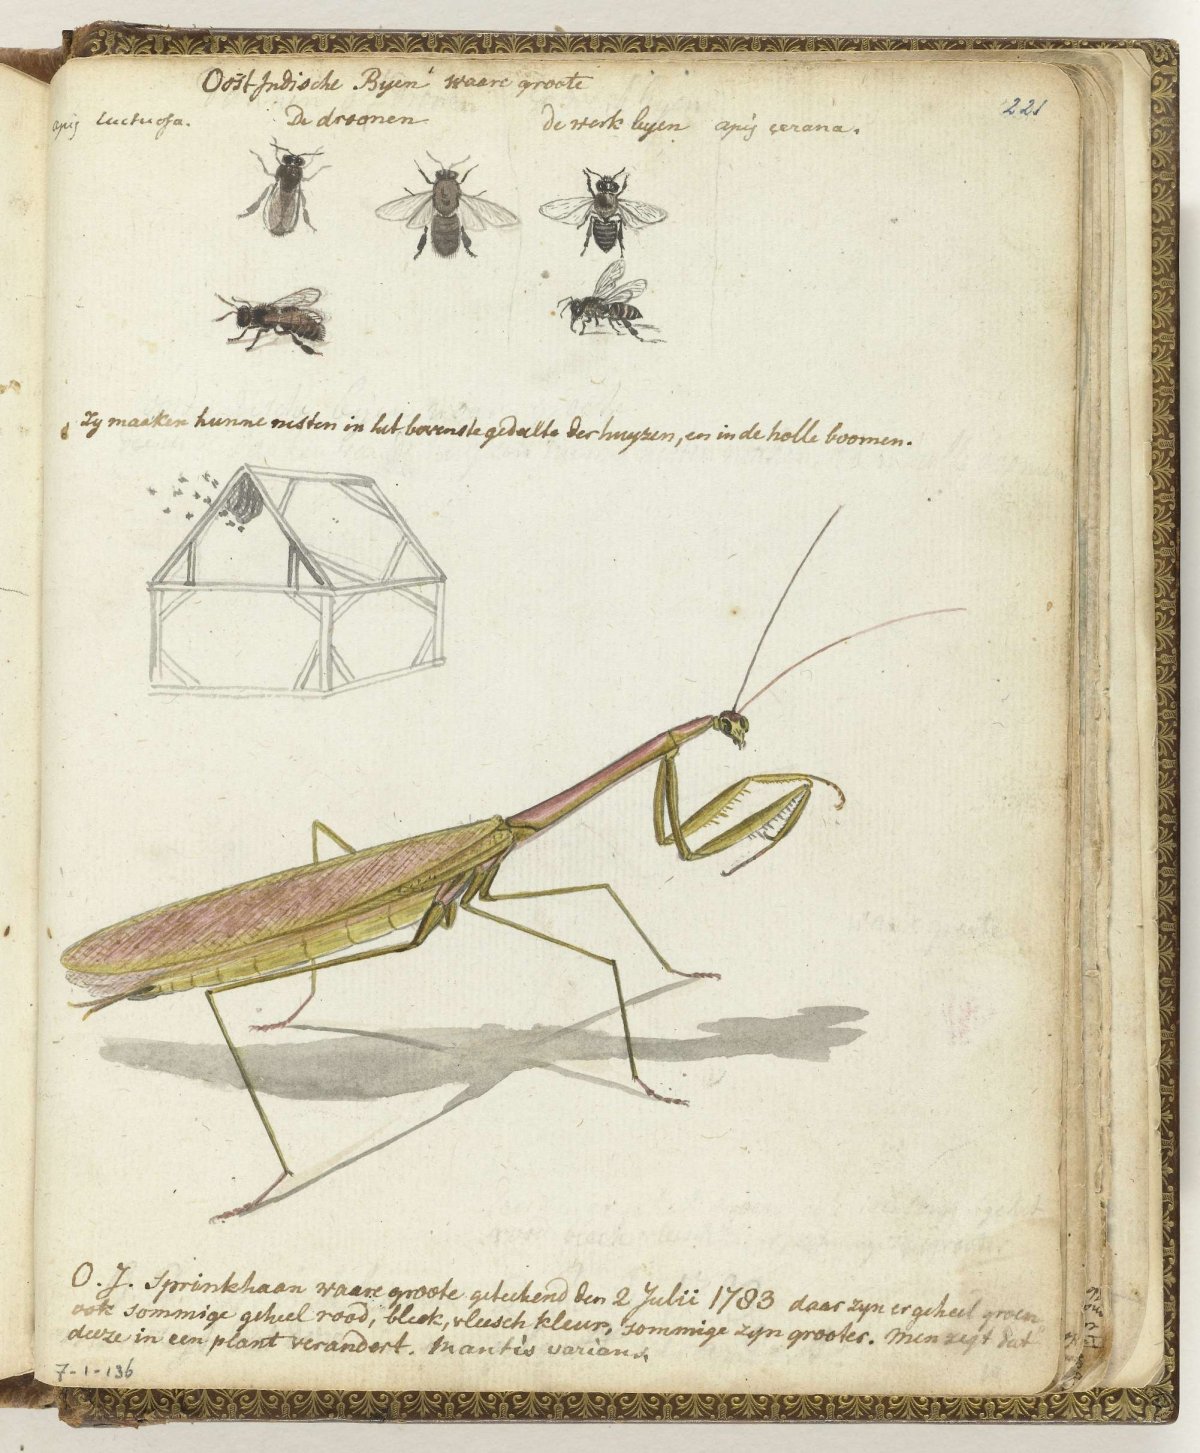 Javanese bees and grasshopper, Jan Brandes, 1783